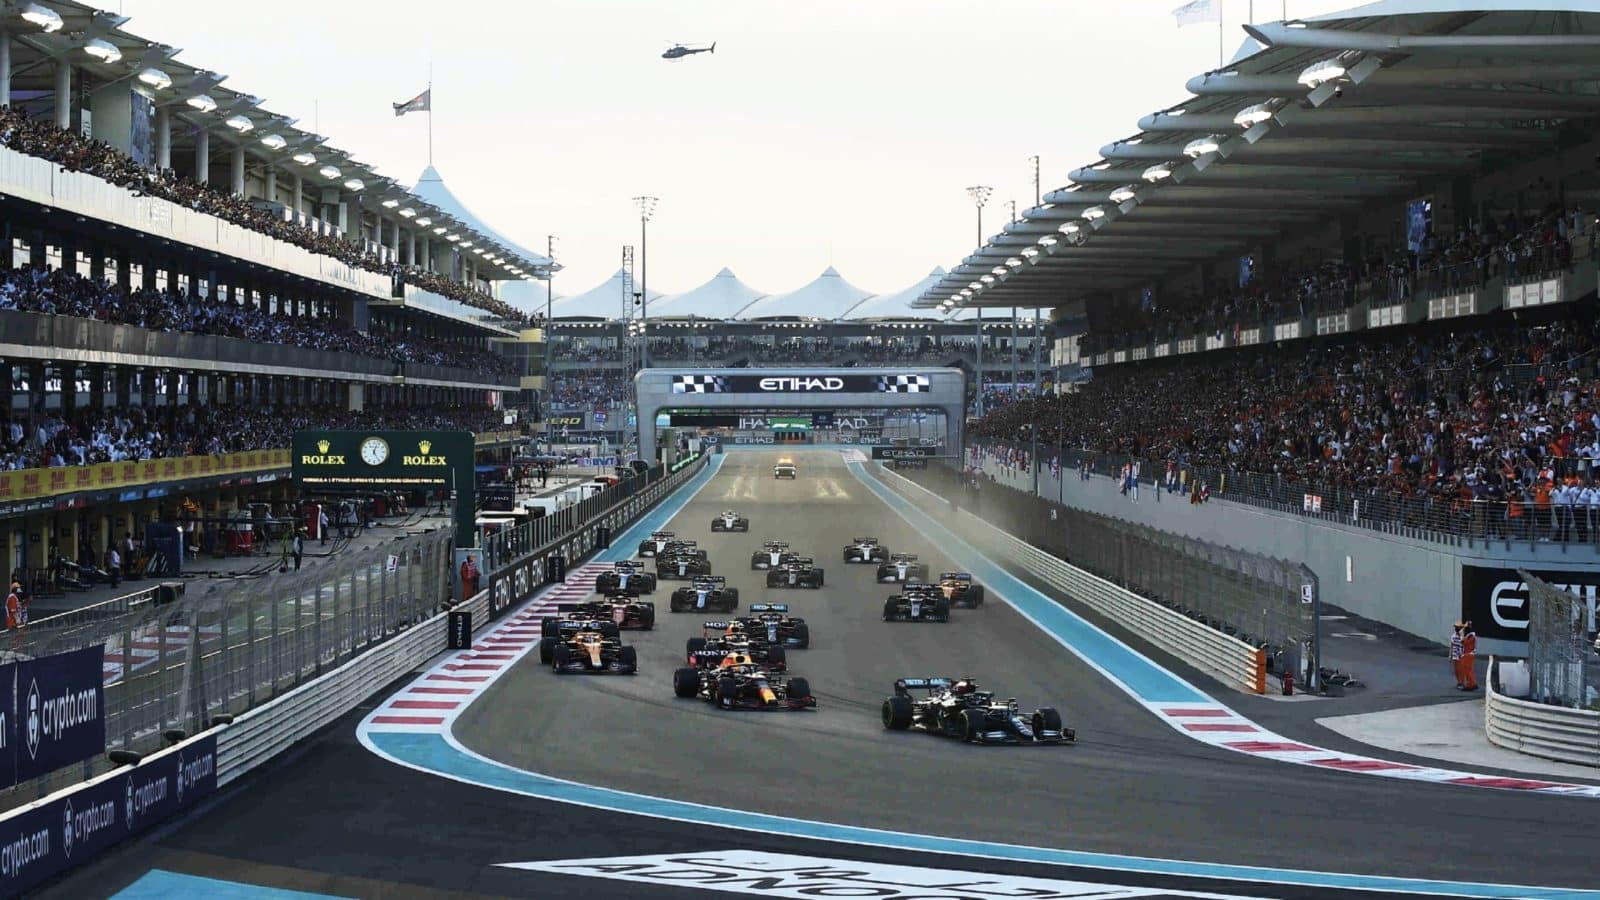 2021 Abu Dhabi Grand Prix